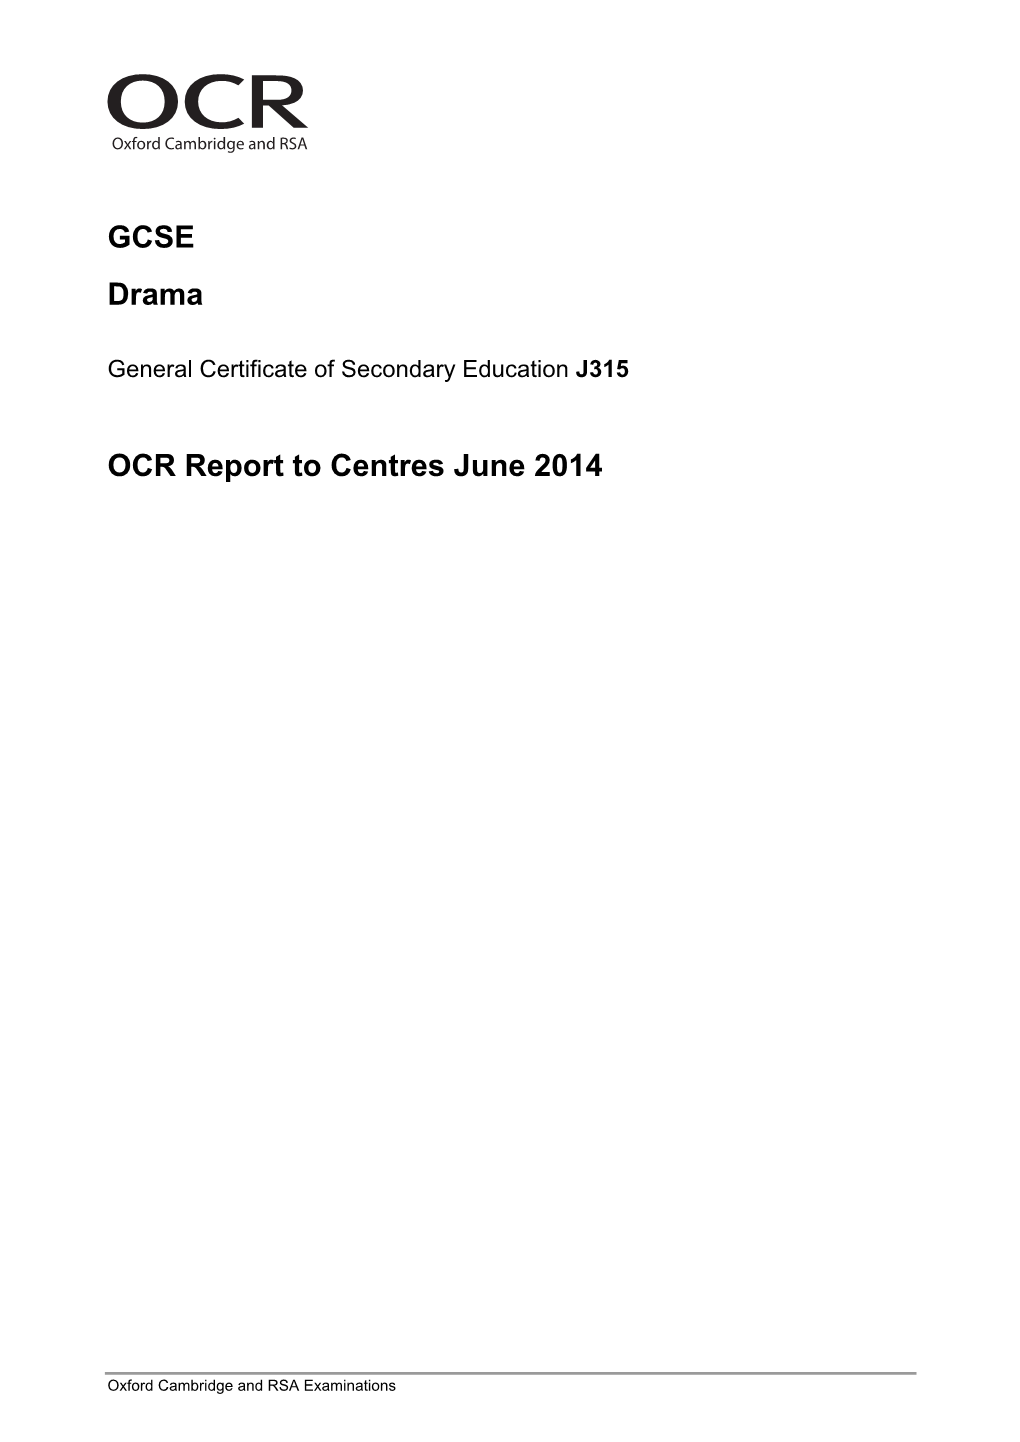 GCSE Drama OCR Report to Centres June 2014